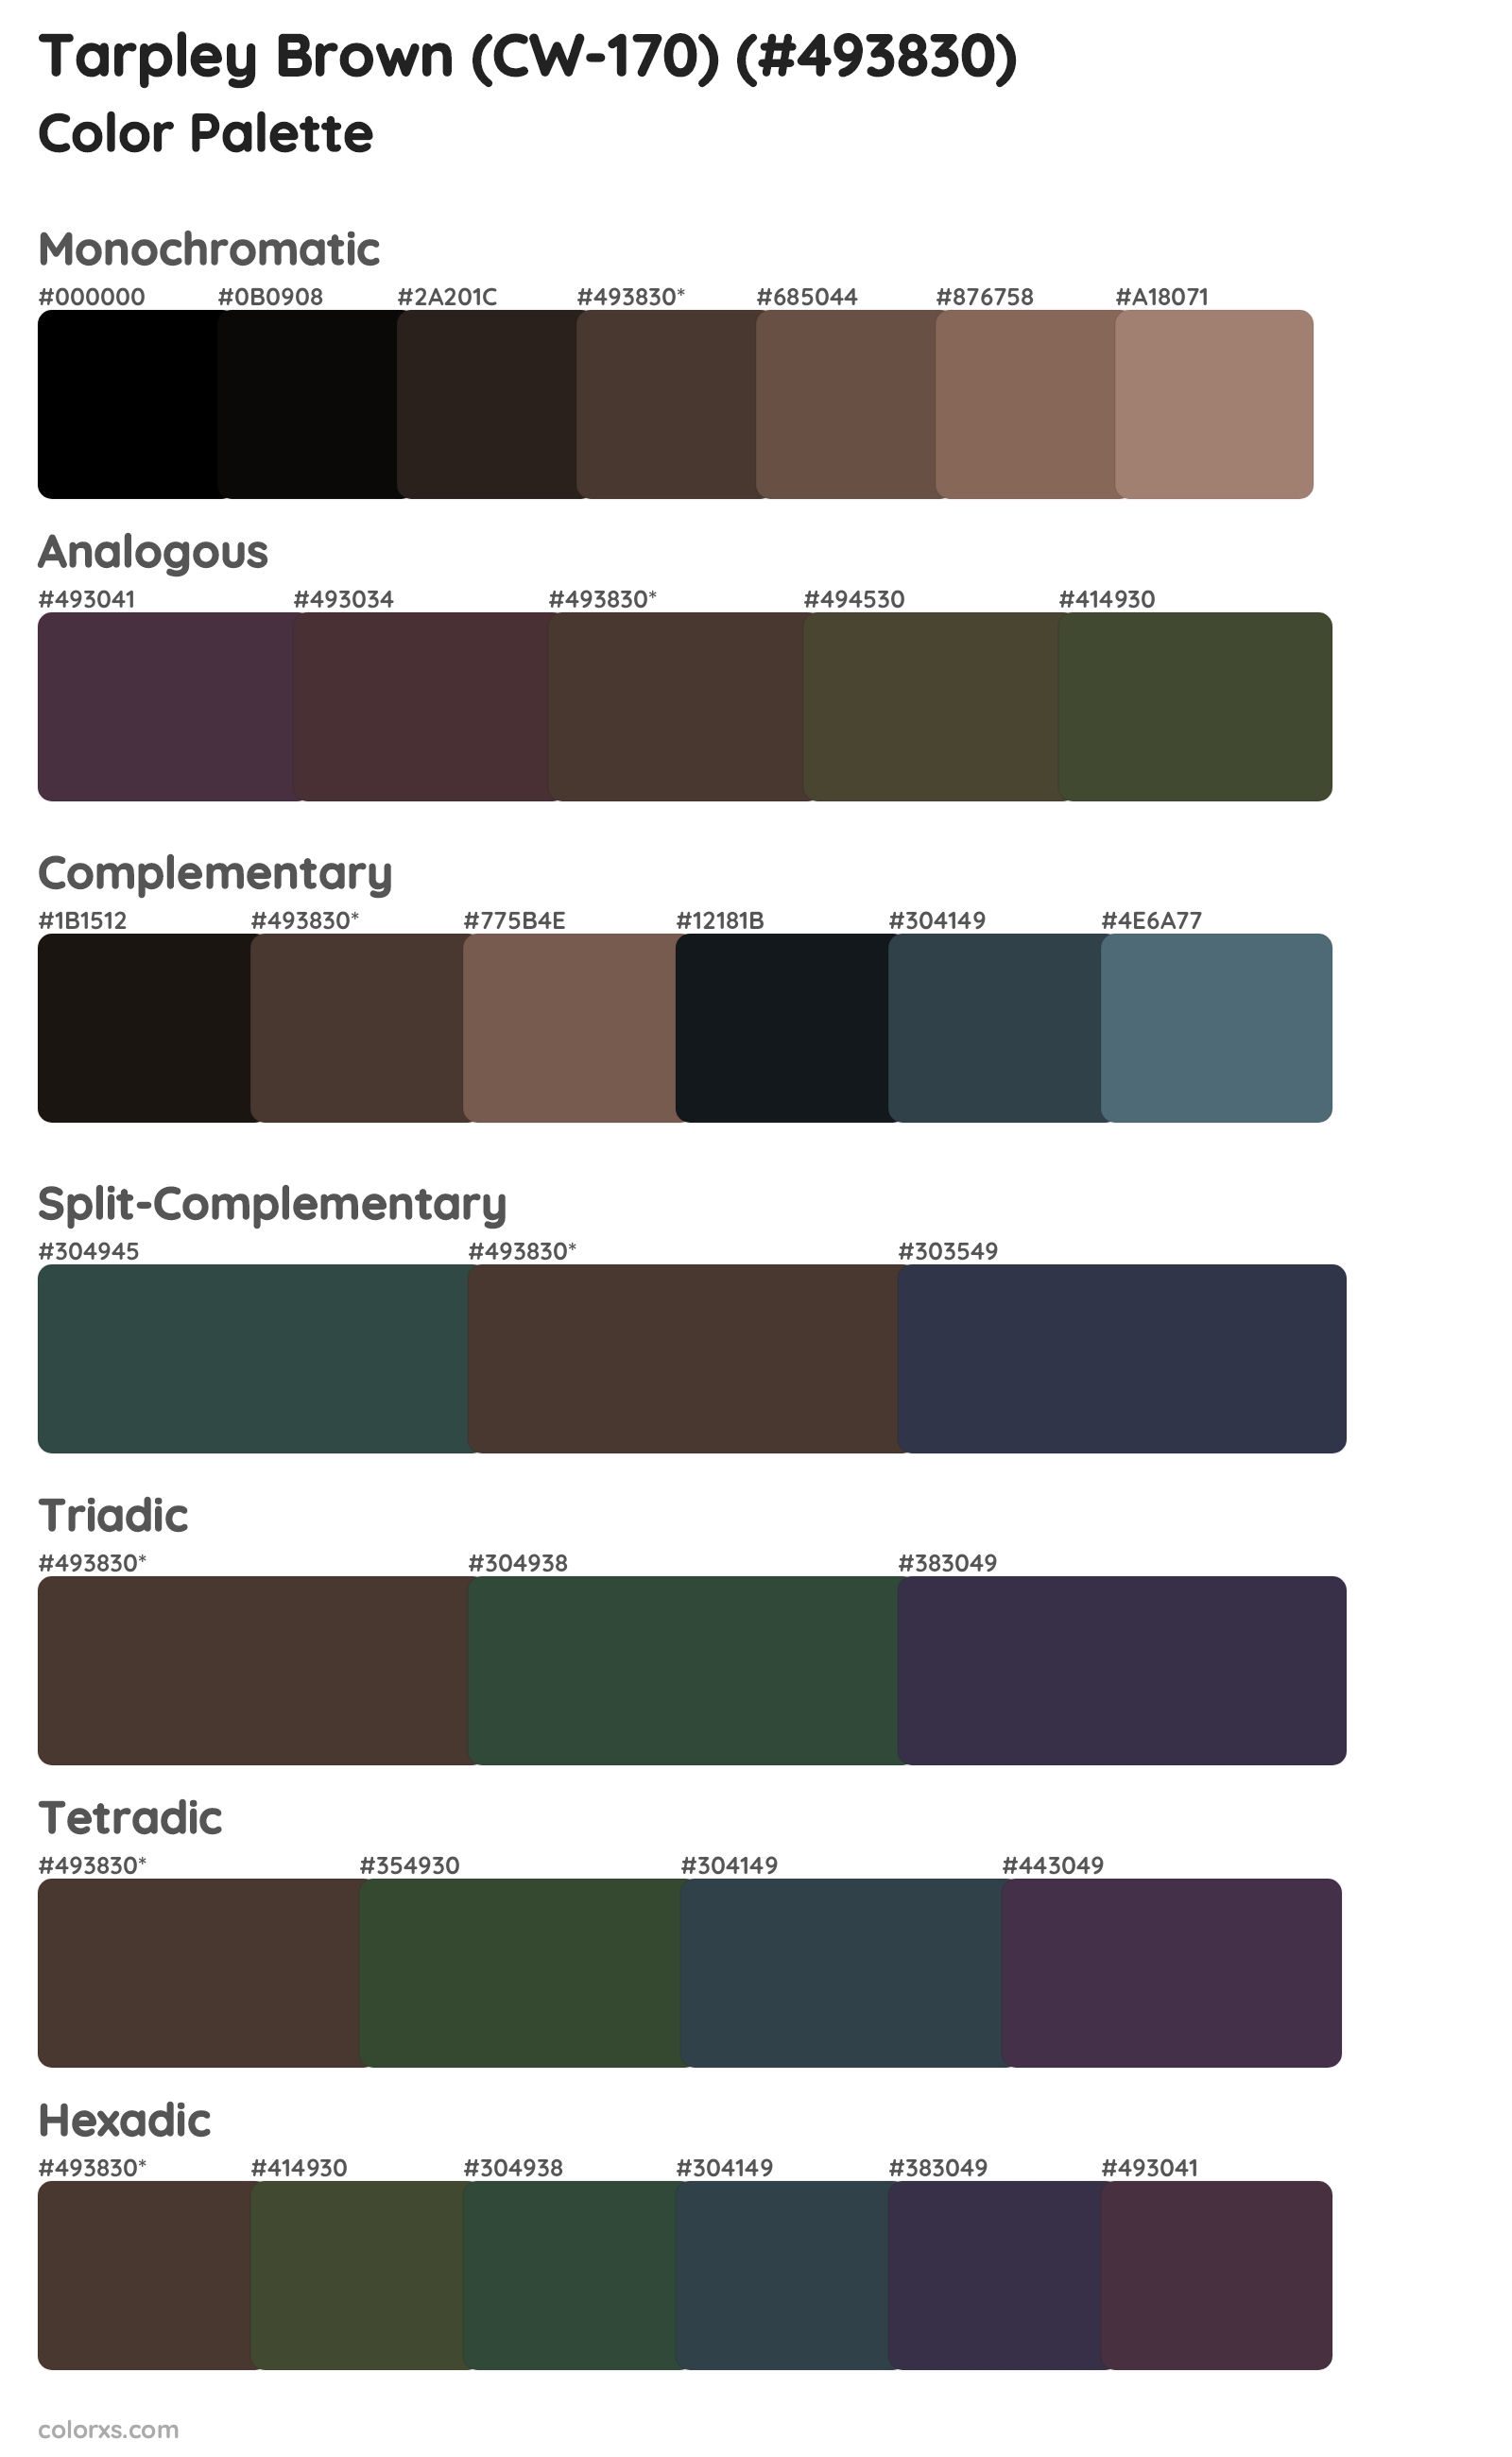 Tarpley Brown (CW-170) Color Scheme Palettes